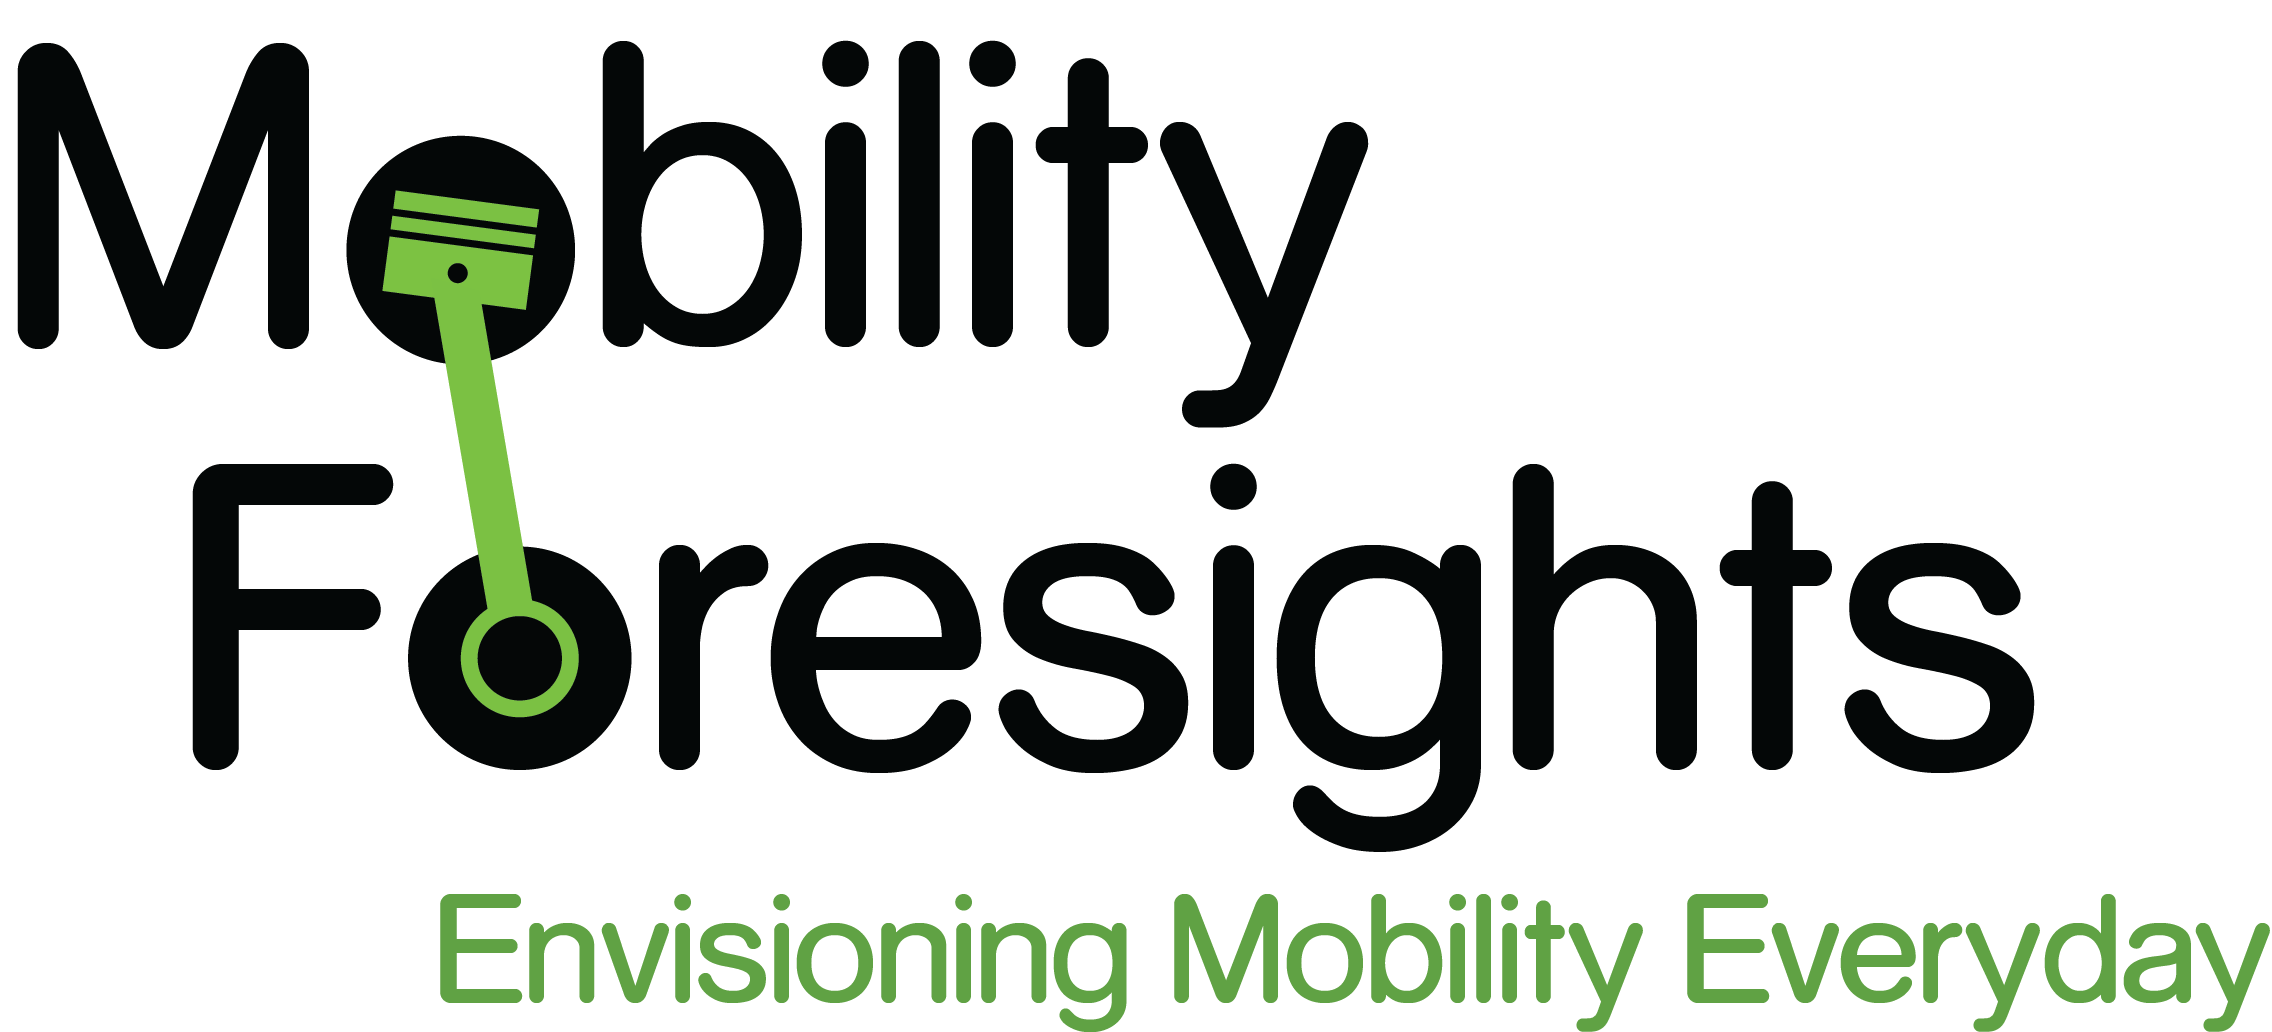 mobilityforesights Logo